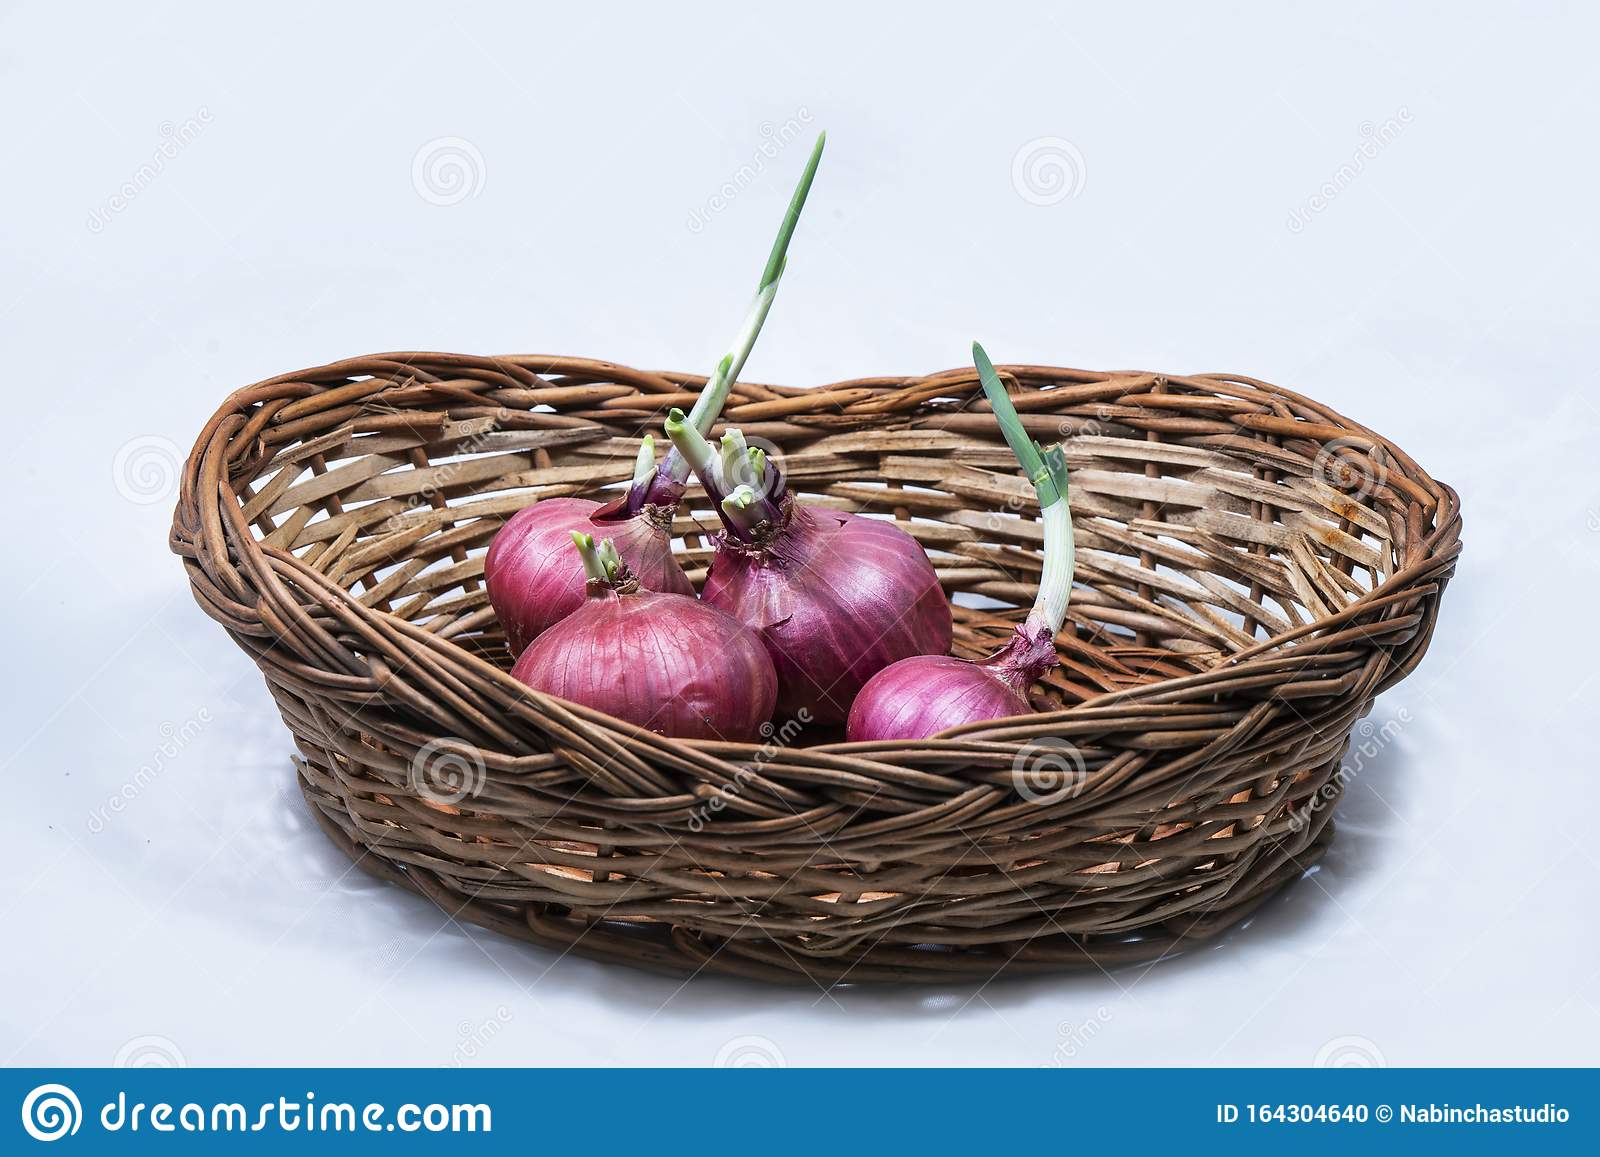 Ramp onion market 4078